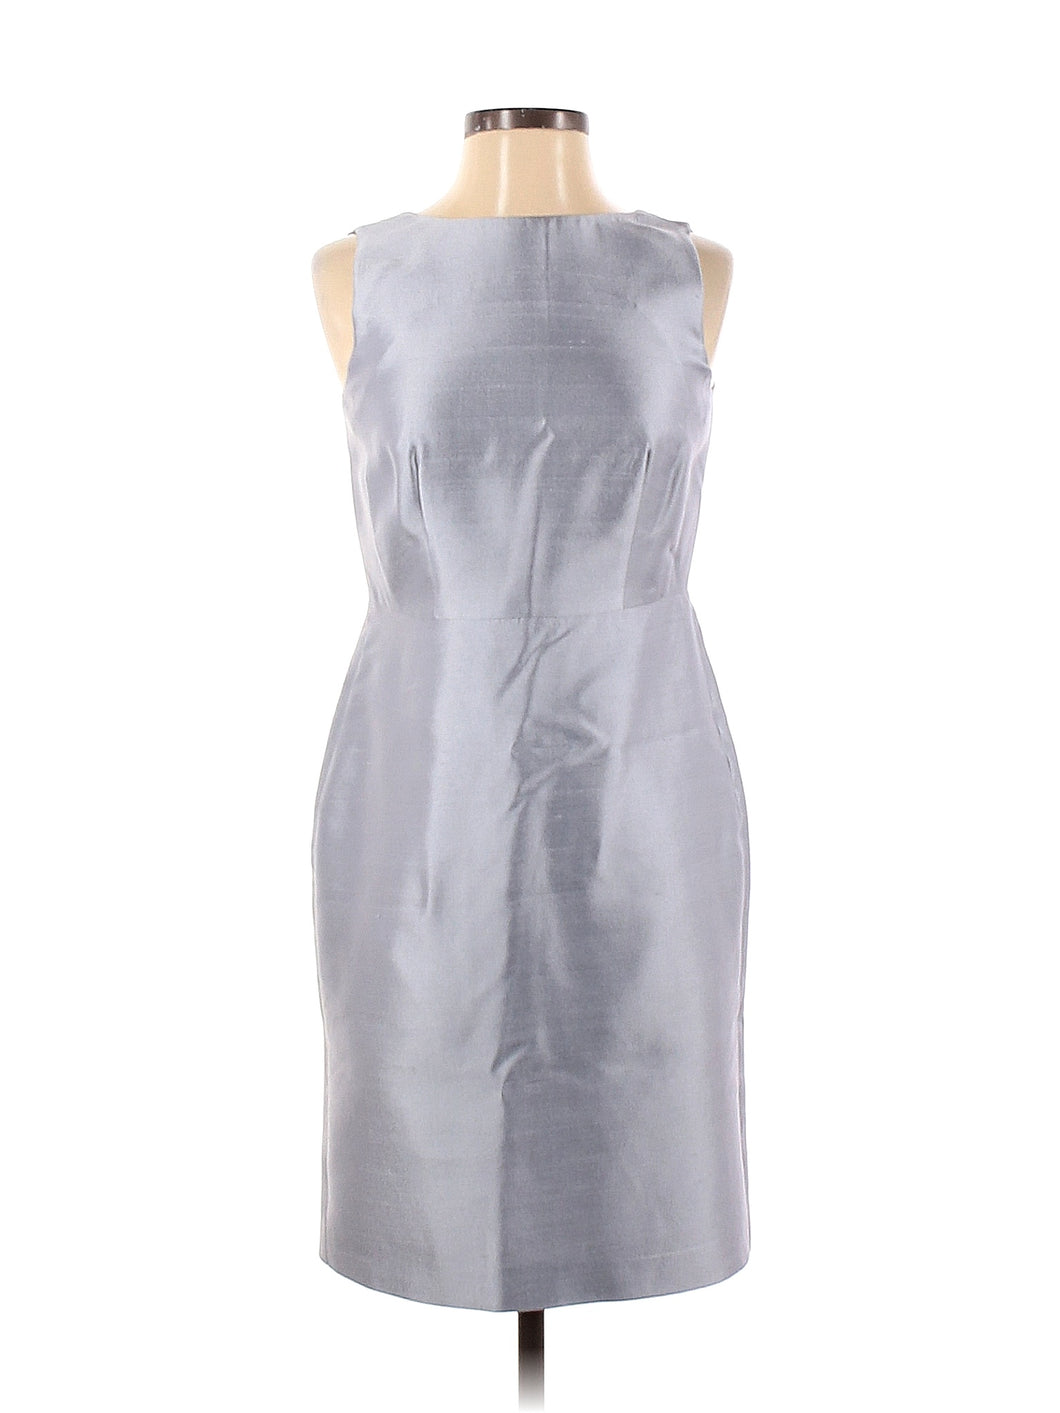 Talbots Silver Silk Sheath Dress - 6P